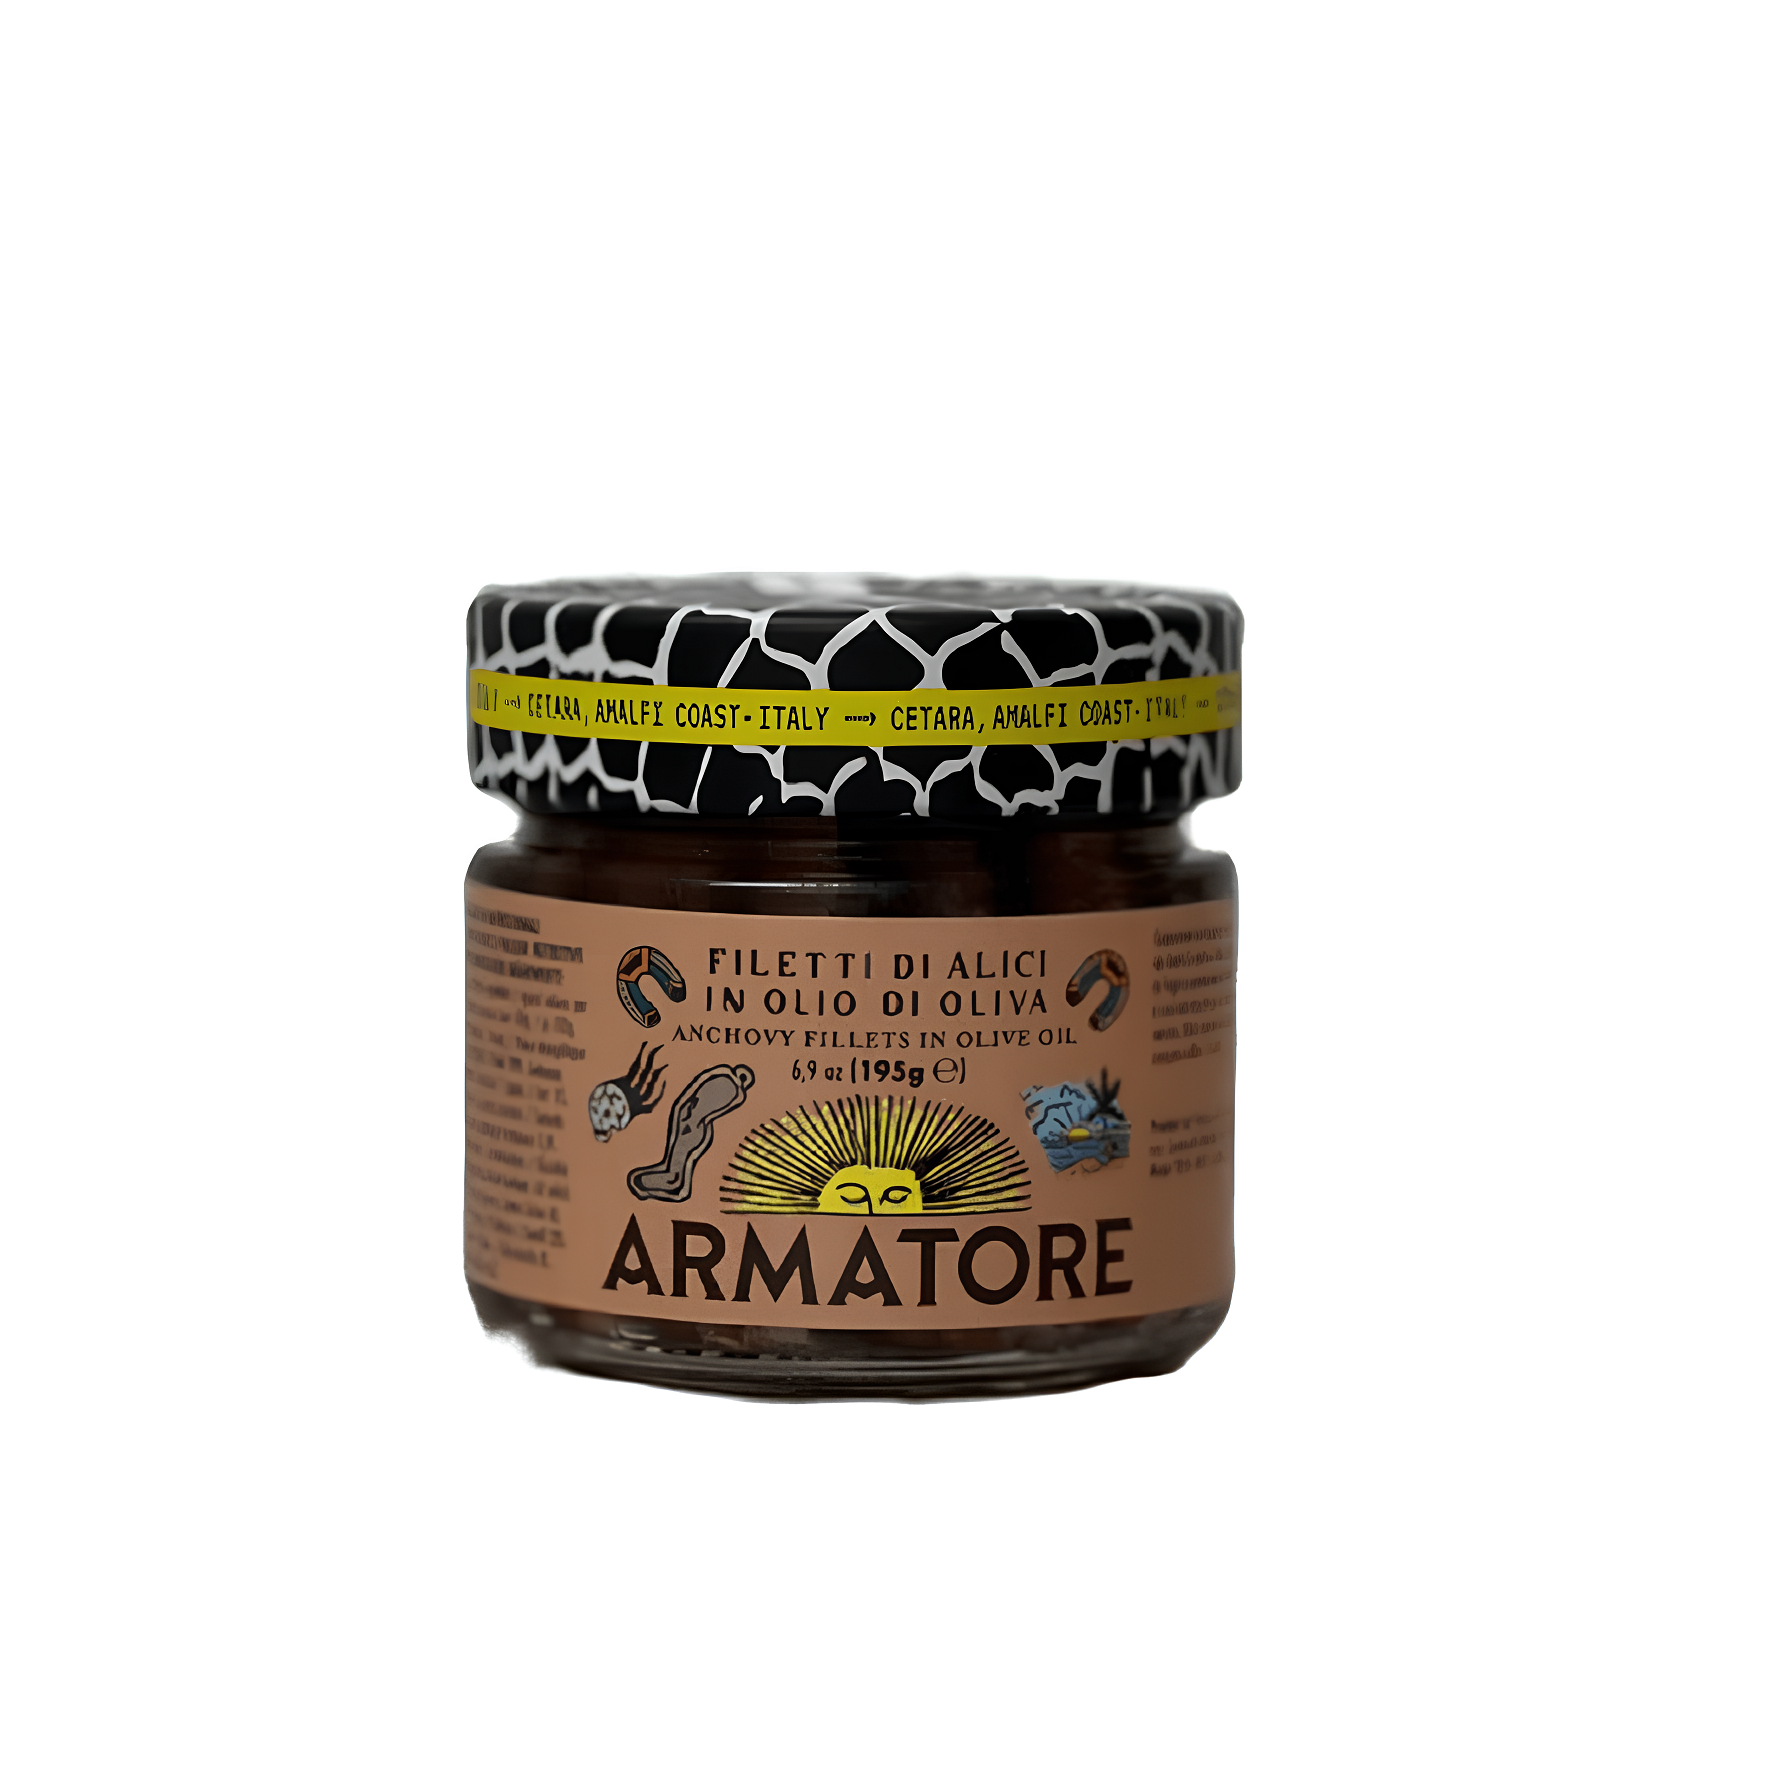 Armatore - "Cetara" Anchovies Fillets in Olive Oil